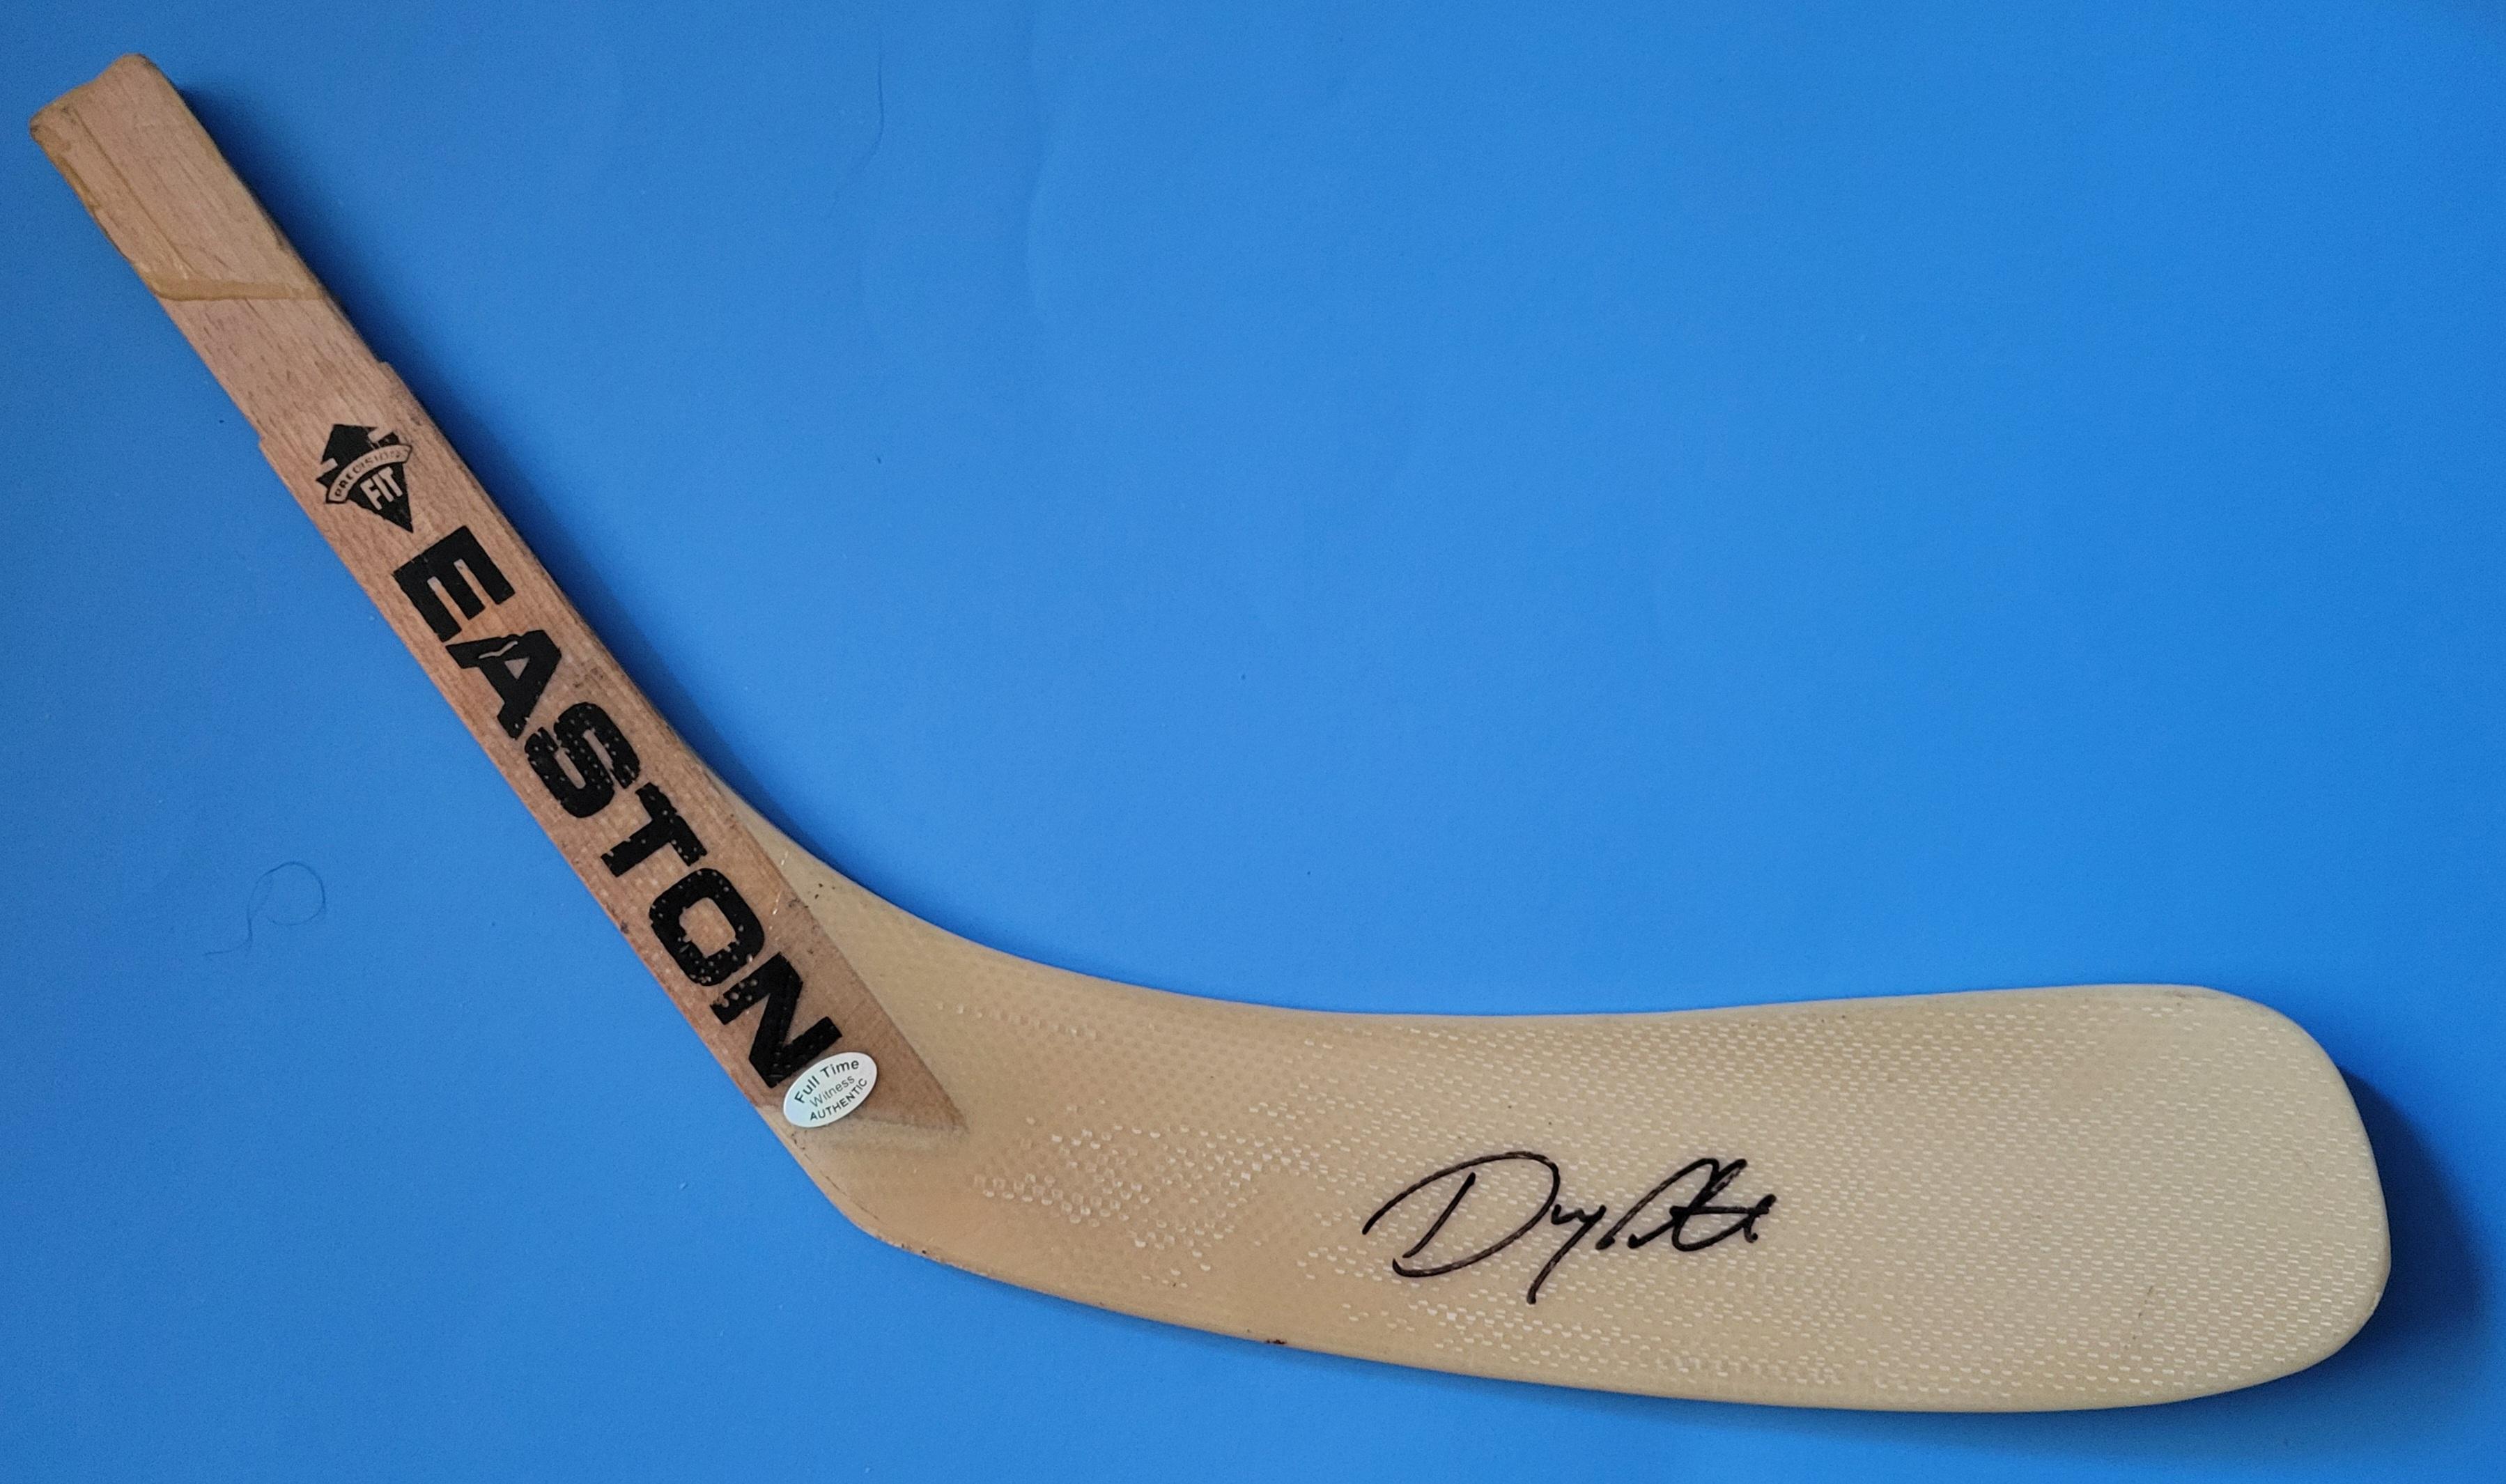 Doug Smith Author of The Goon Doug Glatt Autographed Easton Hockey Blade & Photo Full Time coa